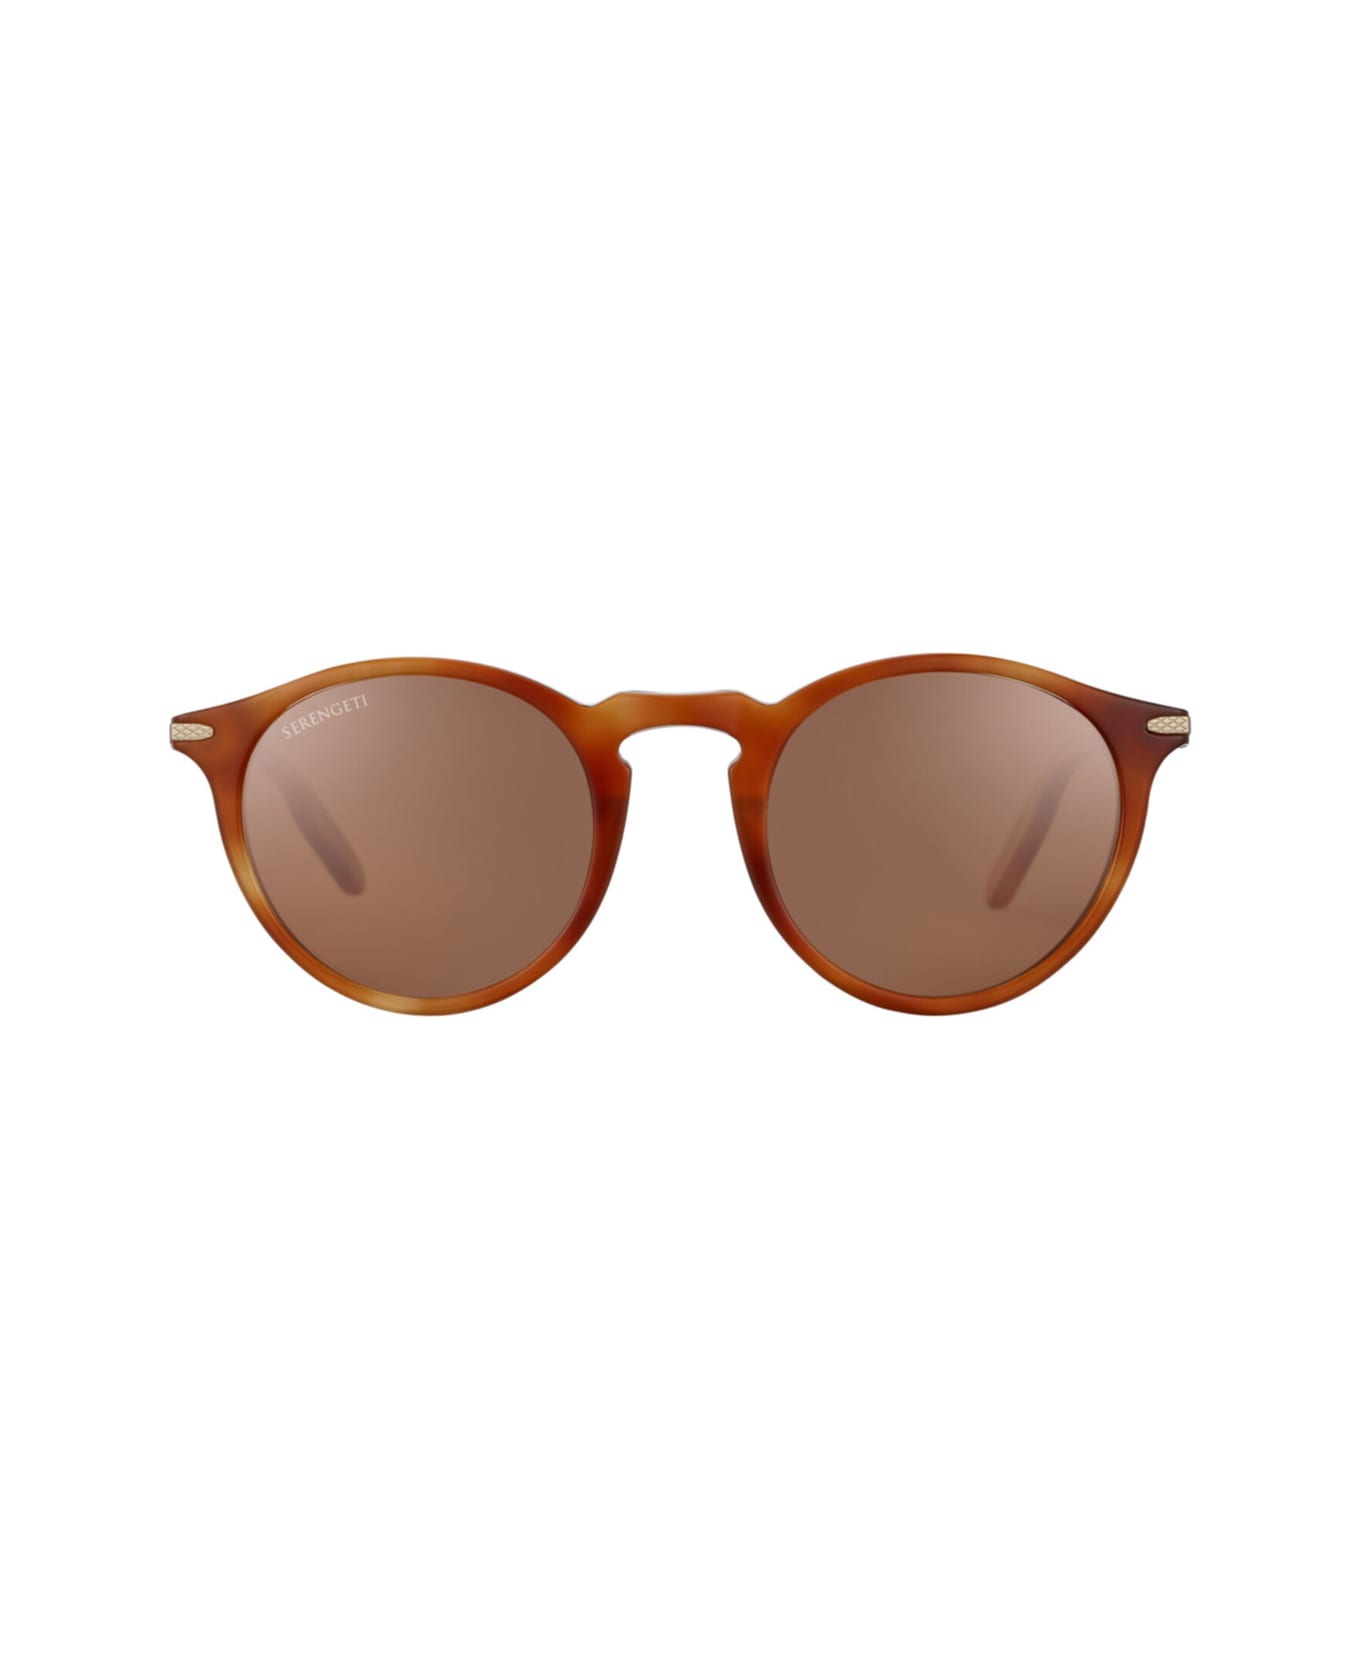 Serengeti Eyewear Raffaele 8953 Sunglasses - Caramello サングラス